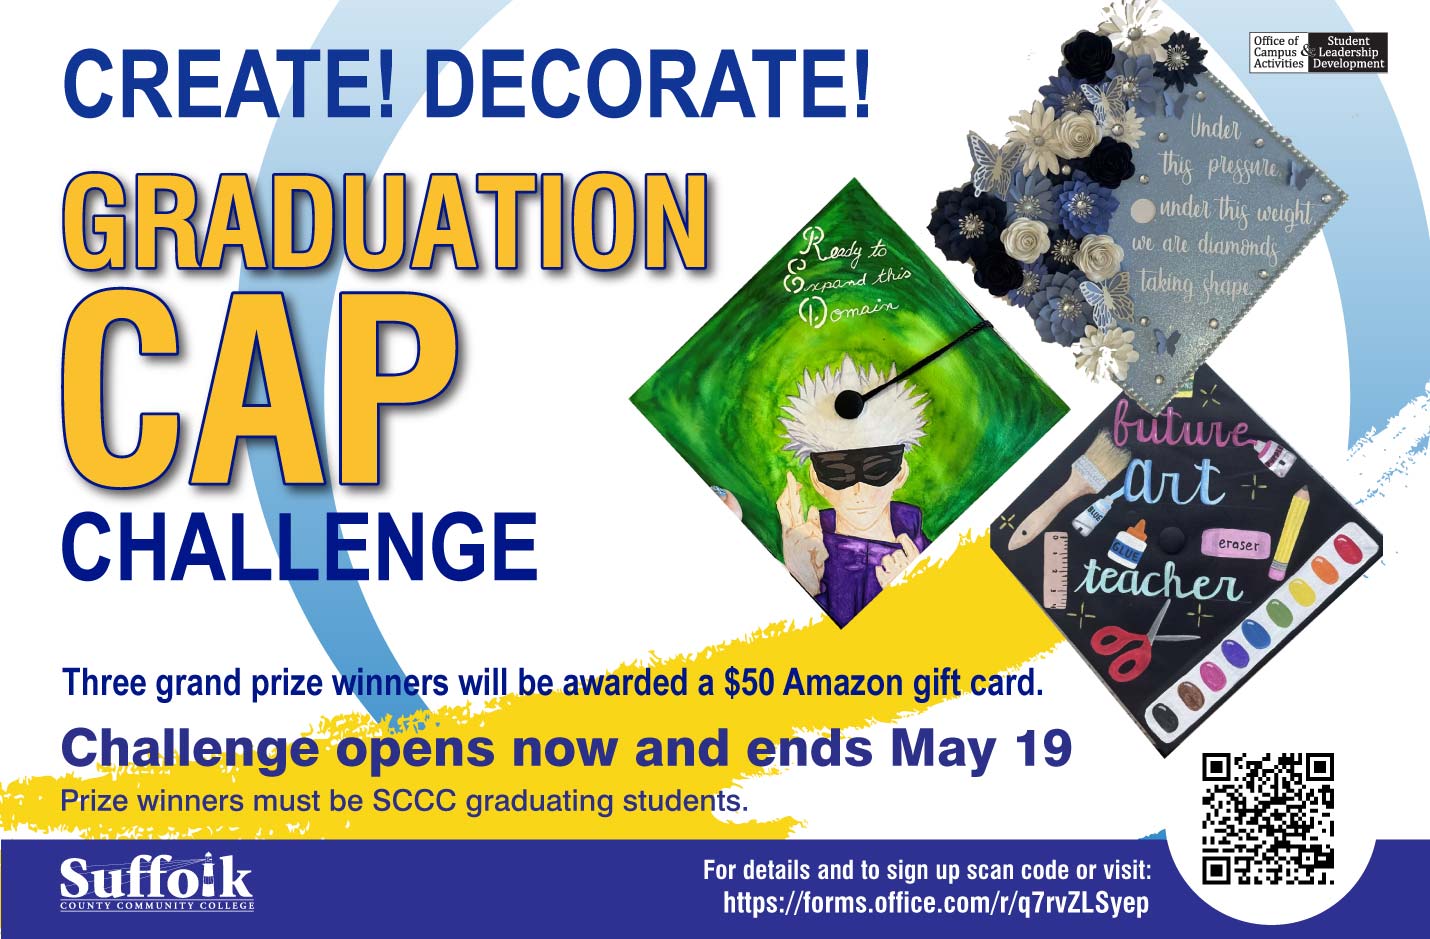 Graduation cap challenge